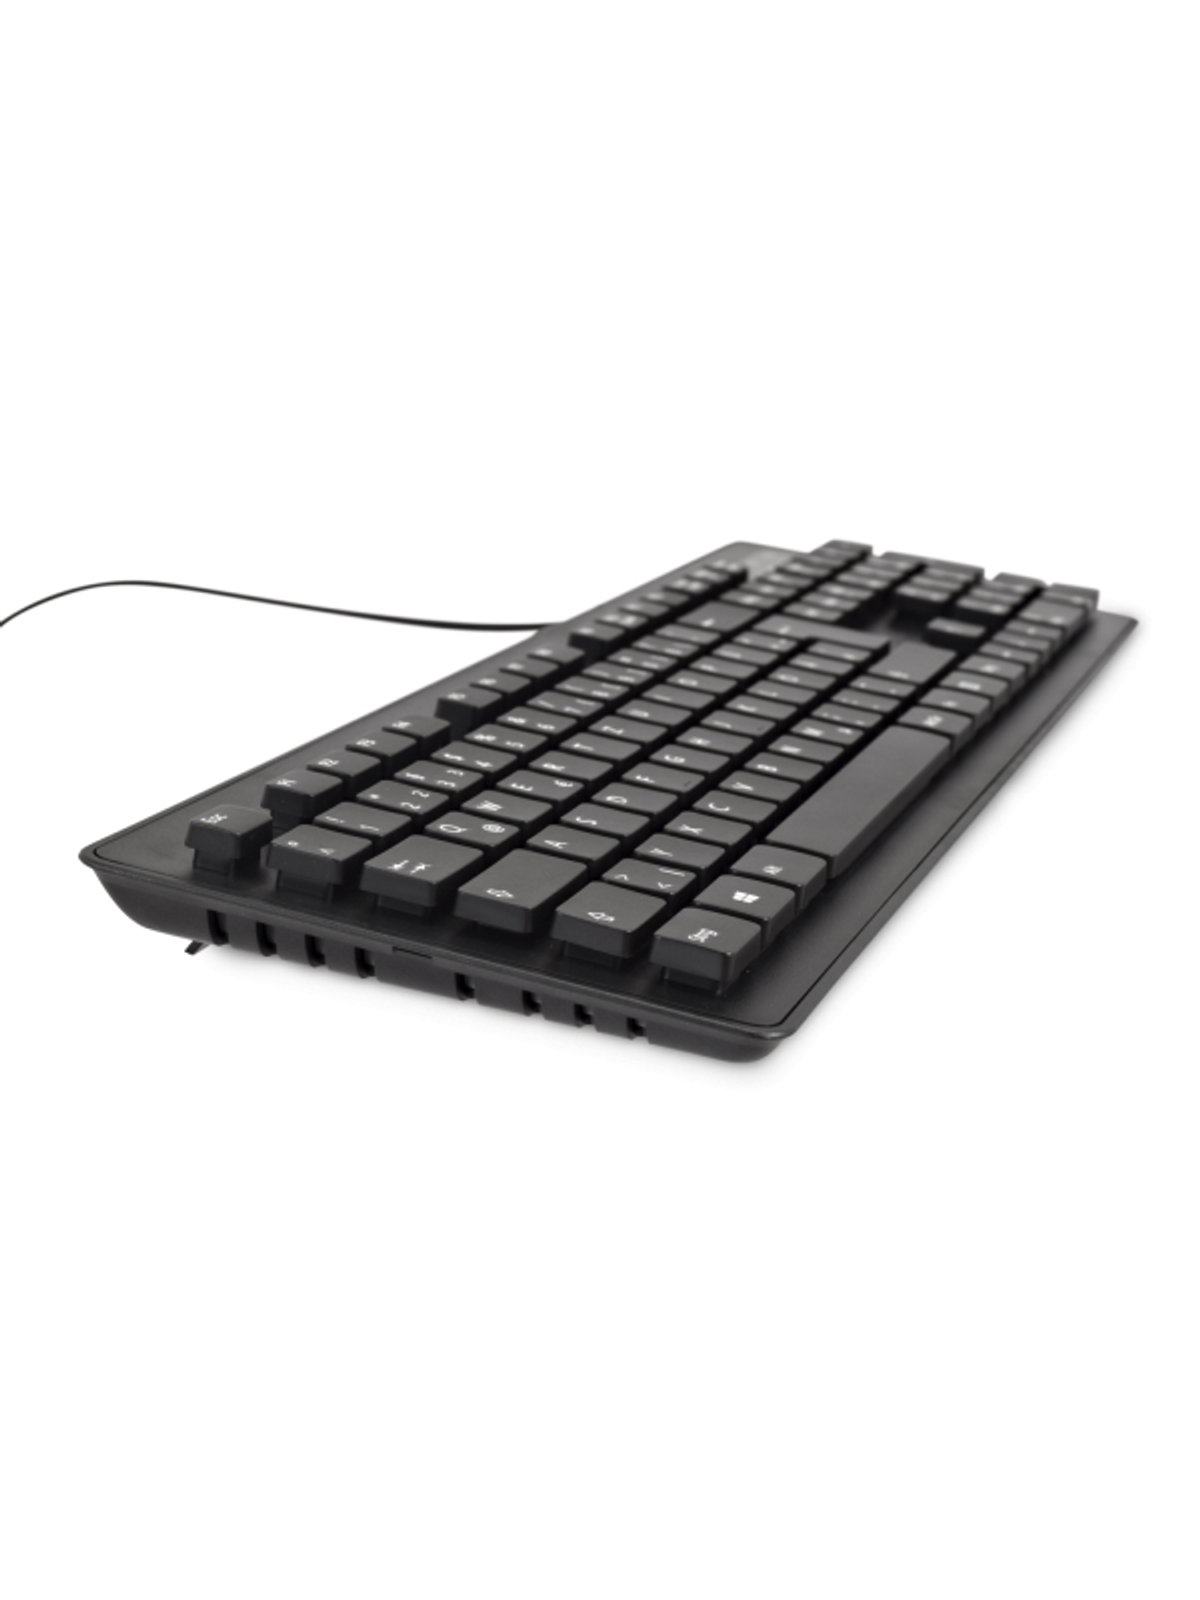 Maus Tastatur CKU700DE, Schwarz Set, V7